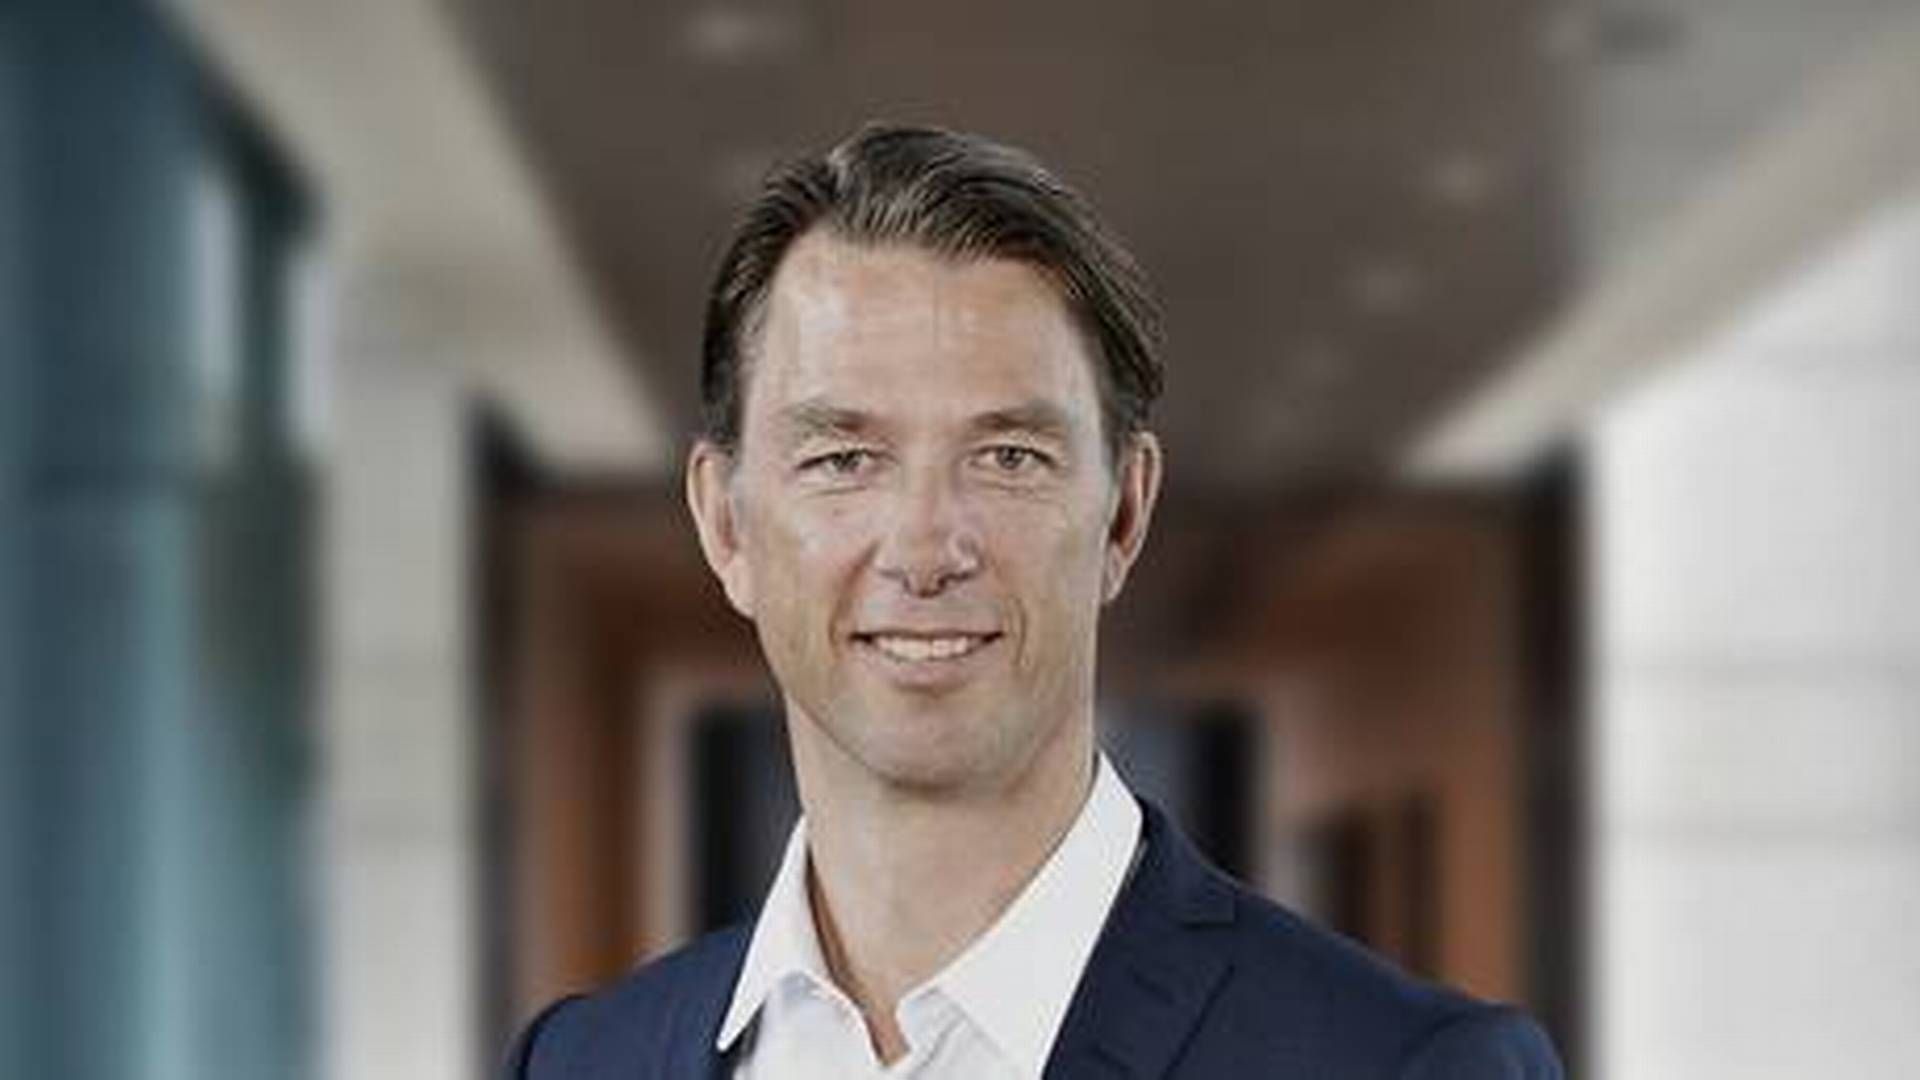 Eric Pedersen, Head of Responsible Investments at Nordea Asset Management. | Photo: Nordea press photo